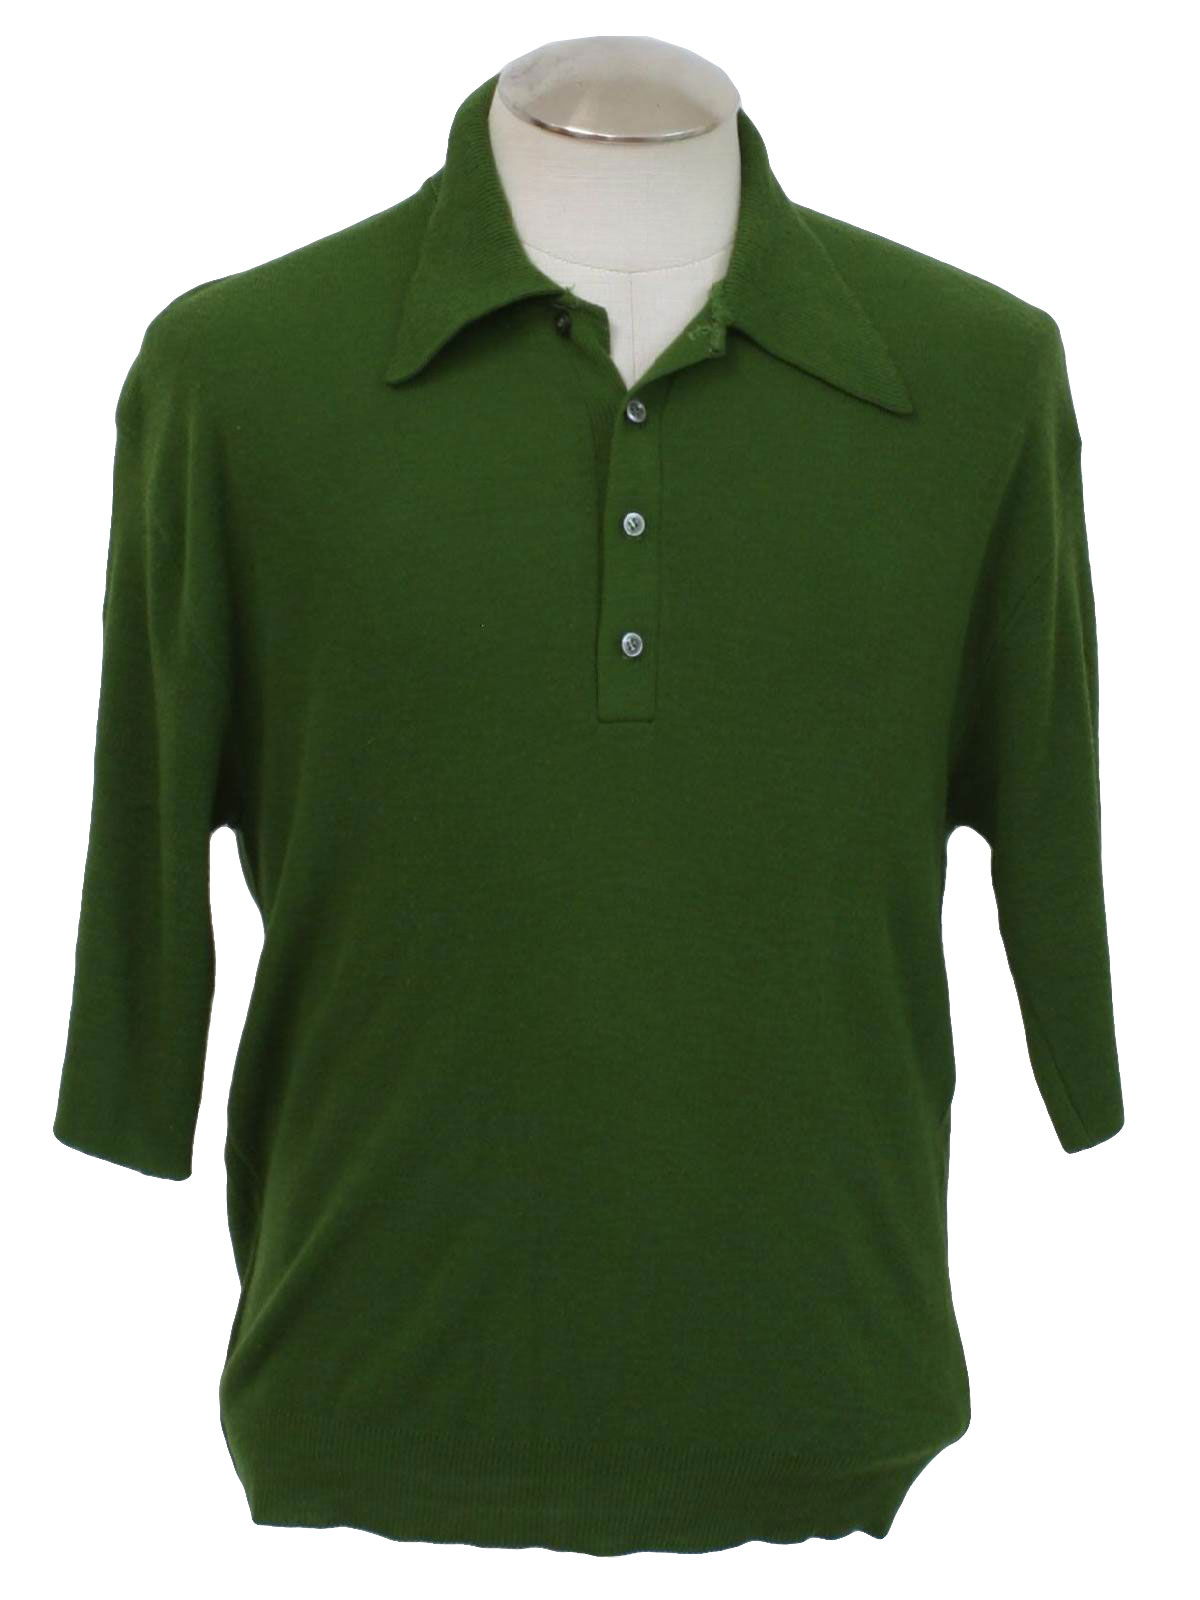 Retro 1960's Knit Shirt: Late 60s -No Label- Mens olive green orlon mod ...